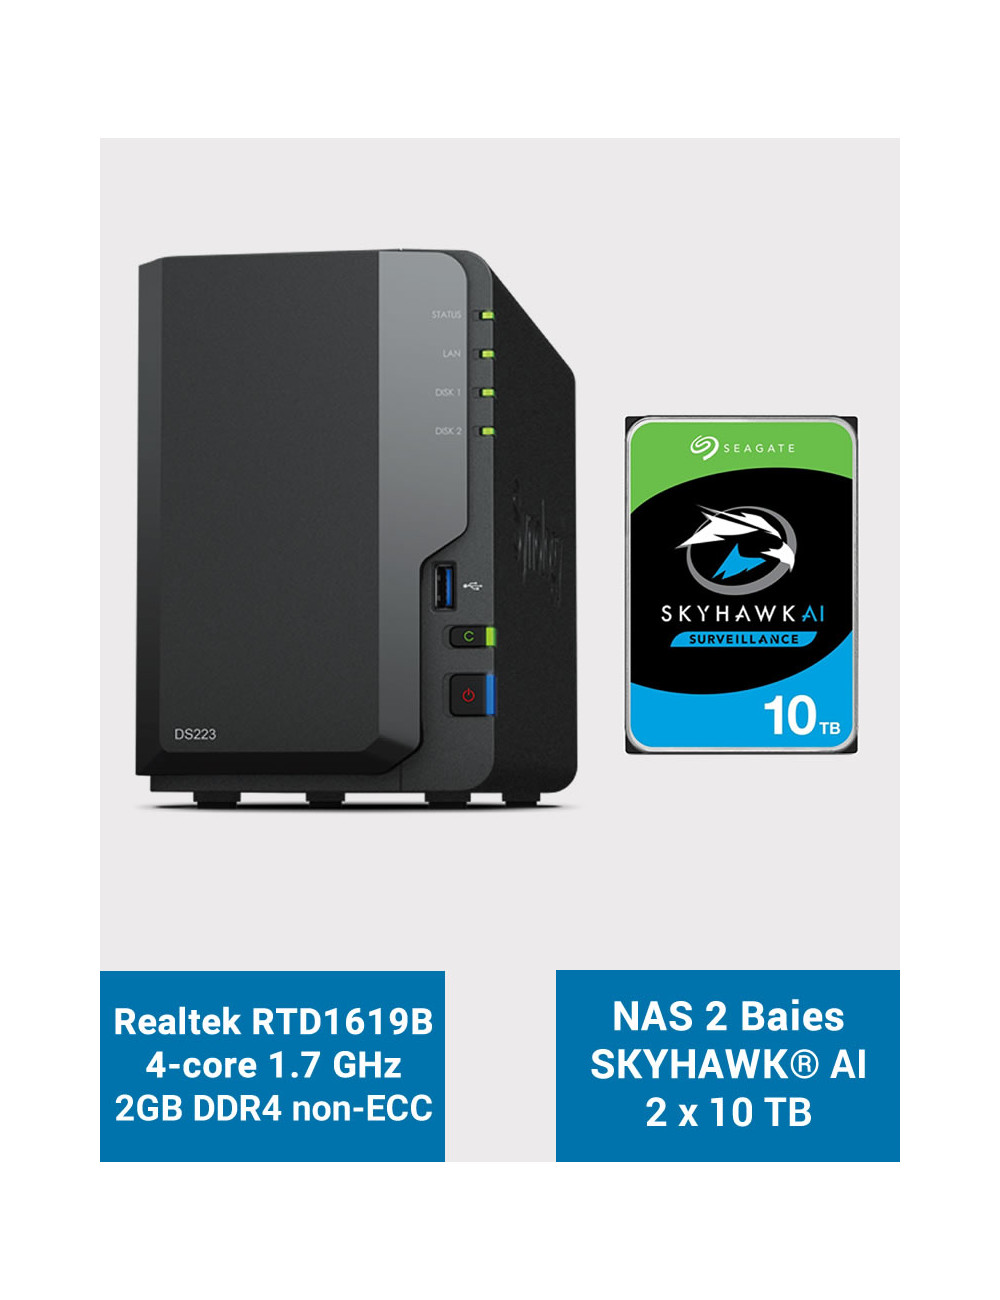 Synology DS223 NAS Server SkyHawk 20TB (2x10TB)